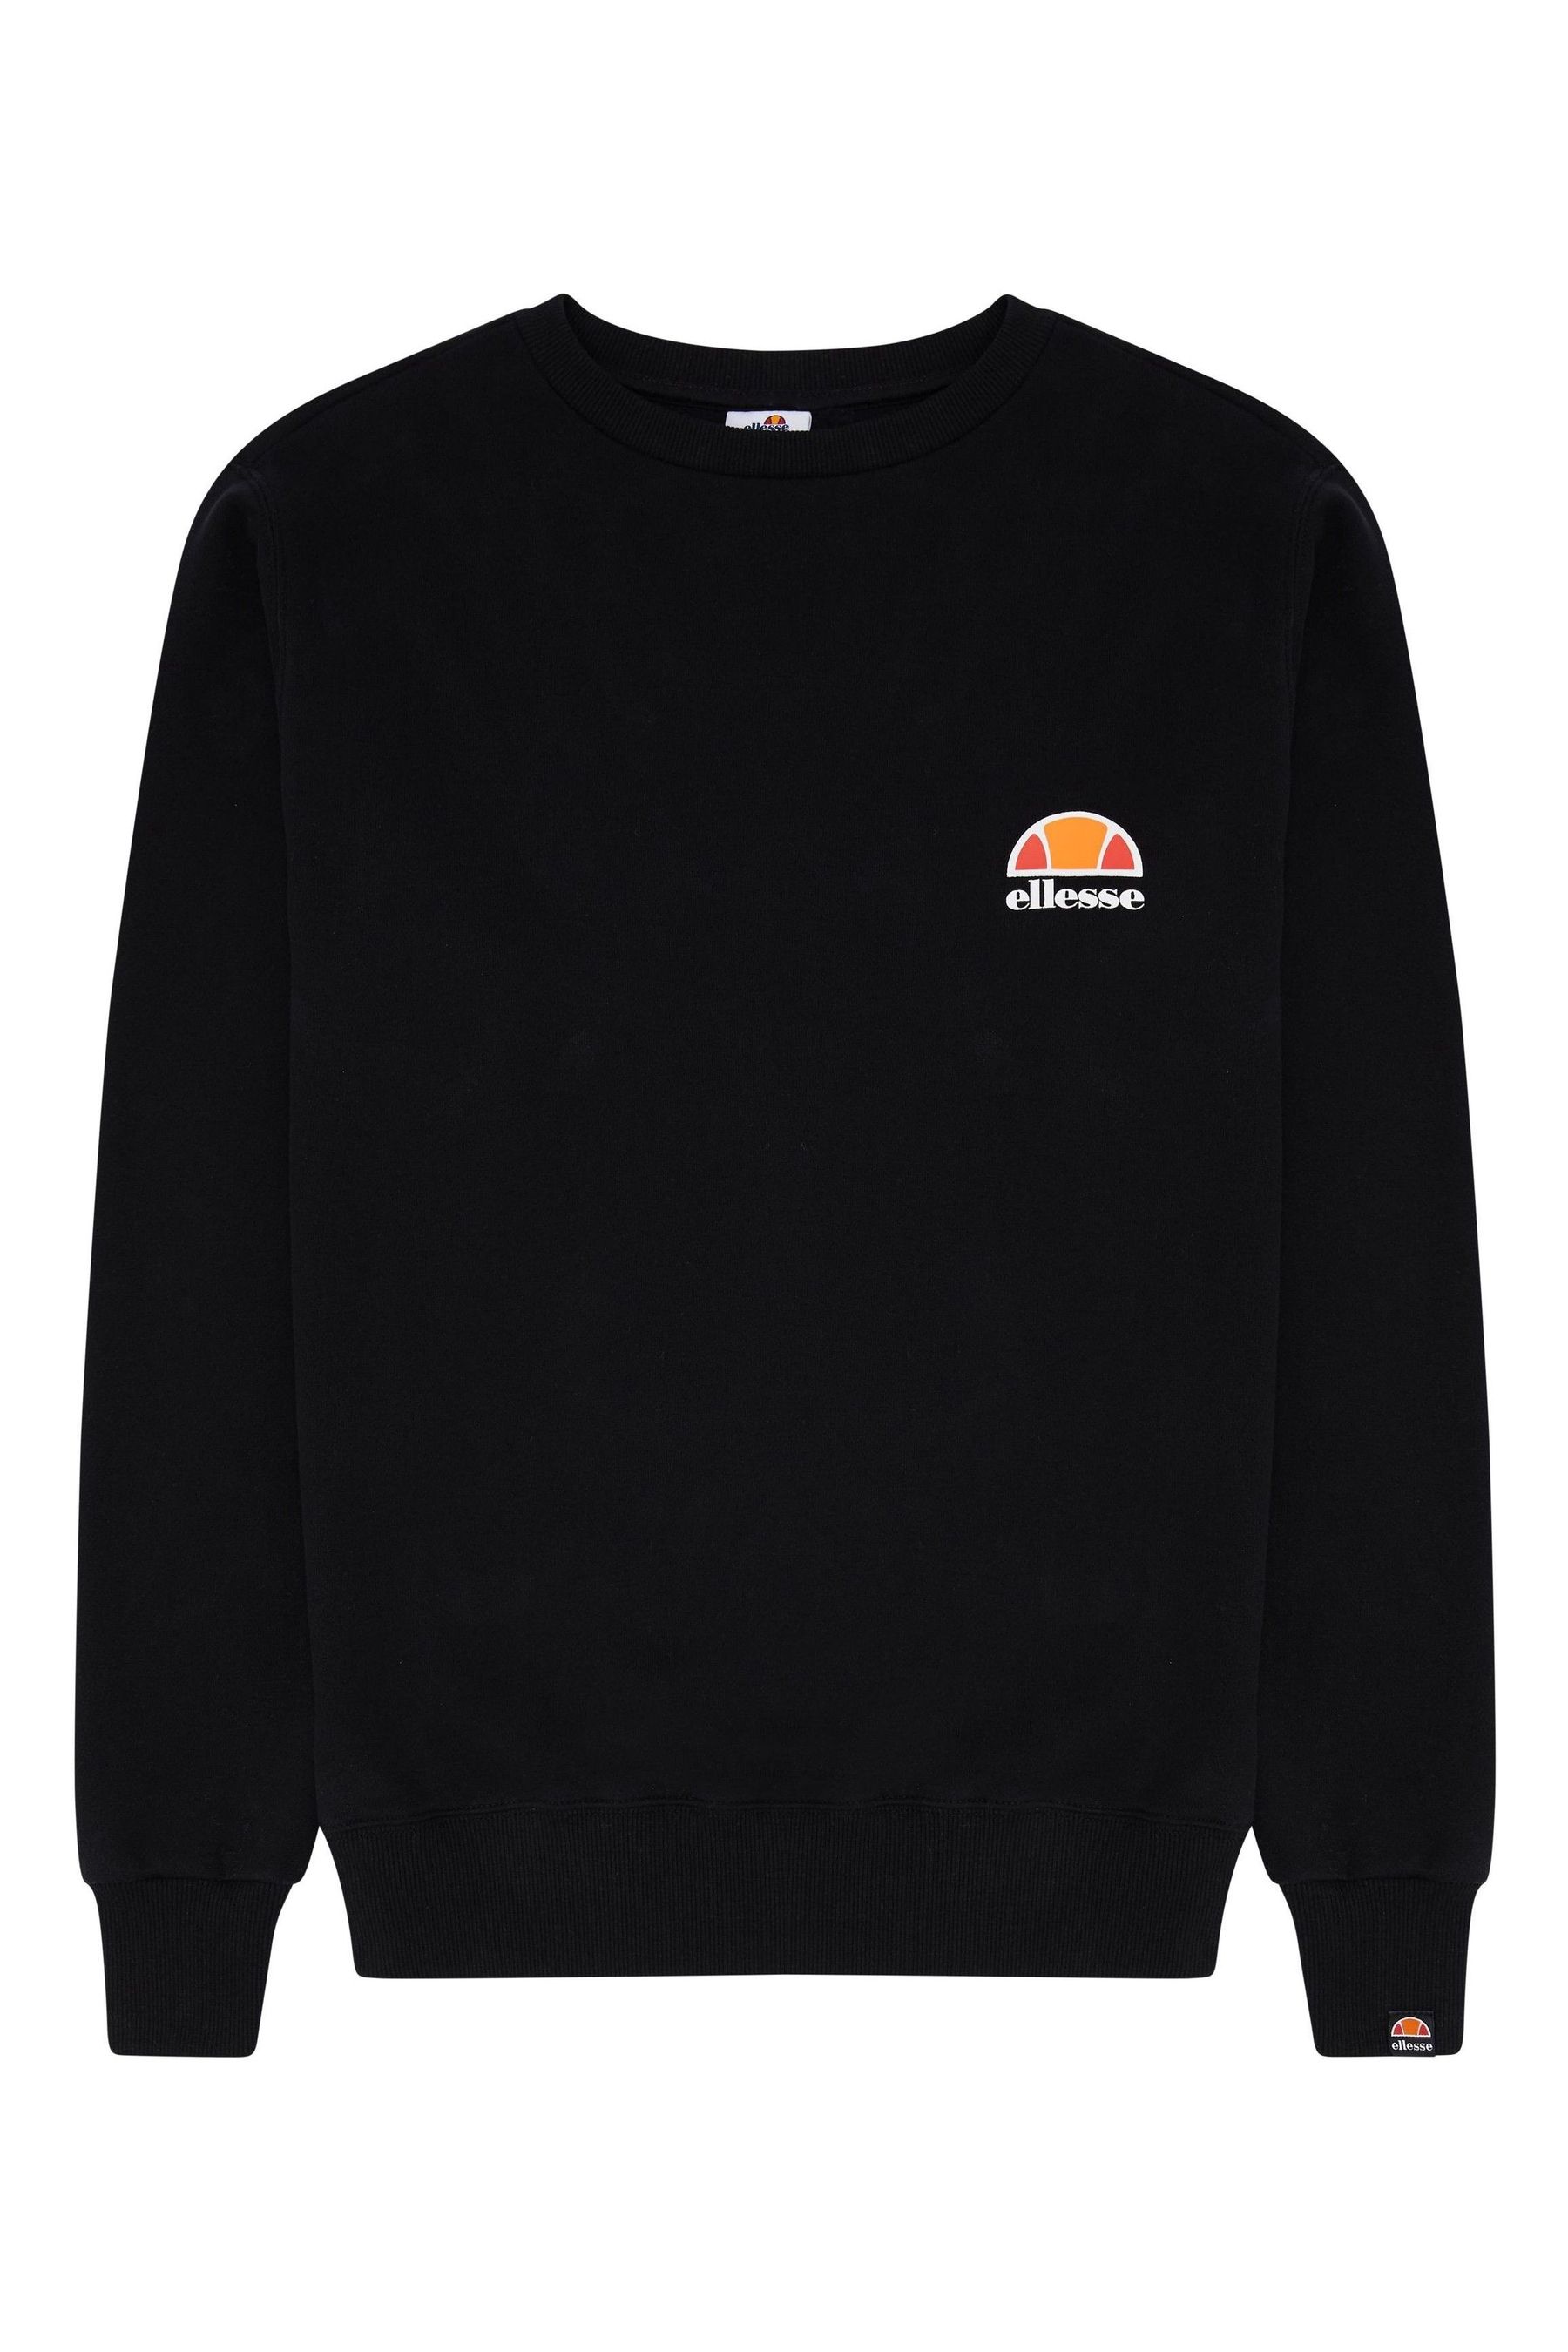 Buy Ellesse Black Haverford Sweatshirt from the Next UK online shop